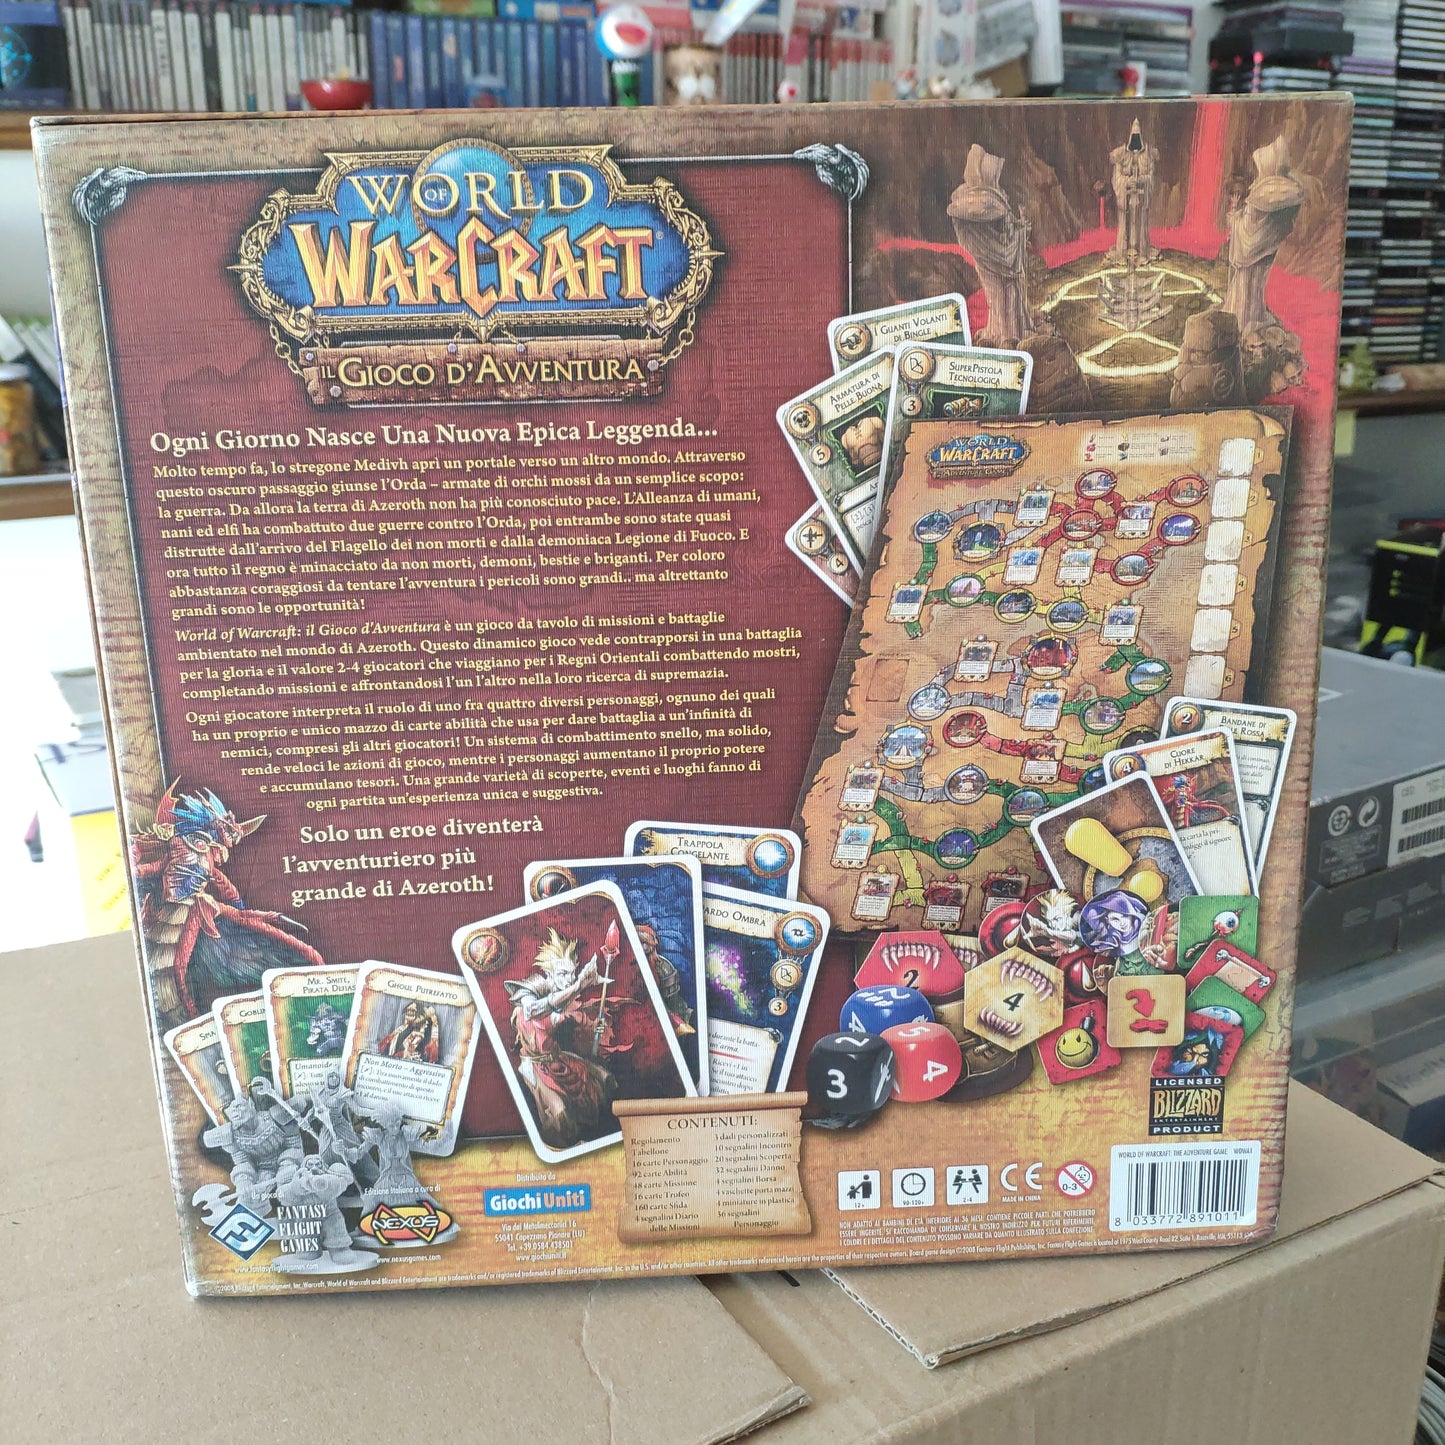 World of Warcraft il Gioco D'avventura